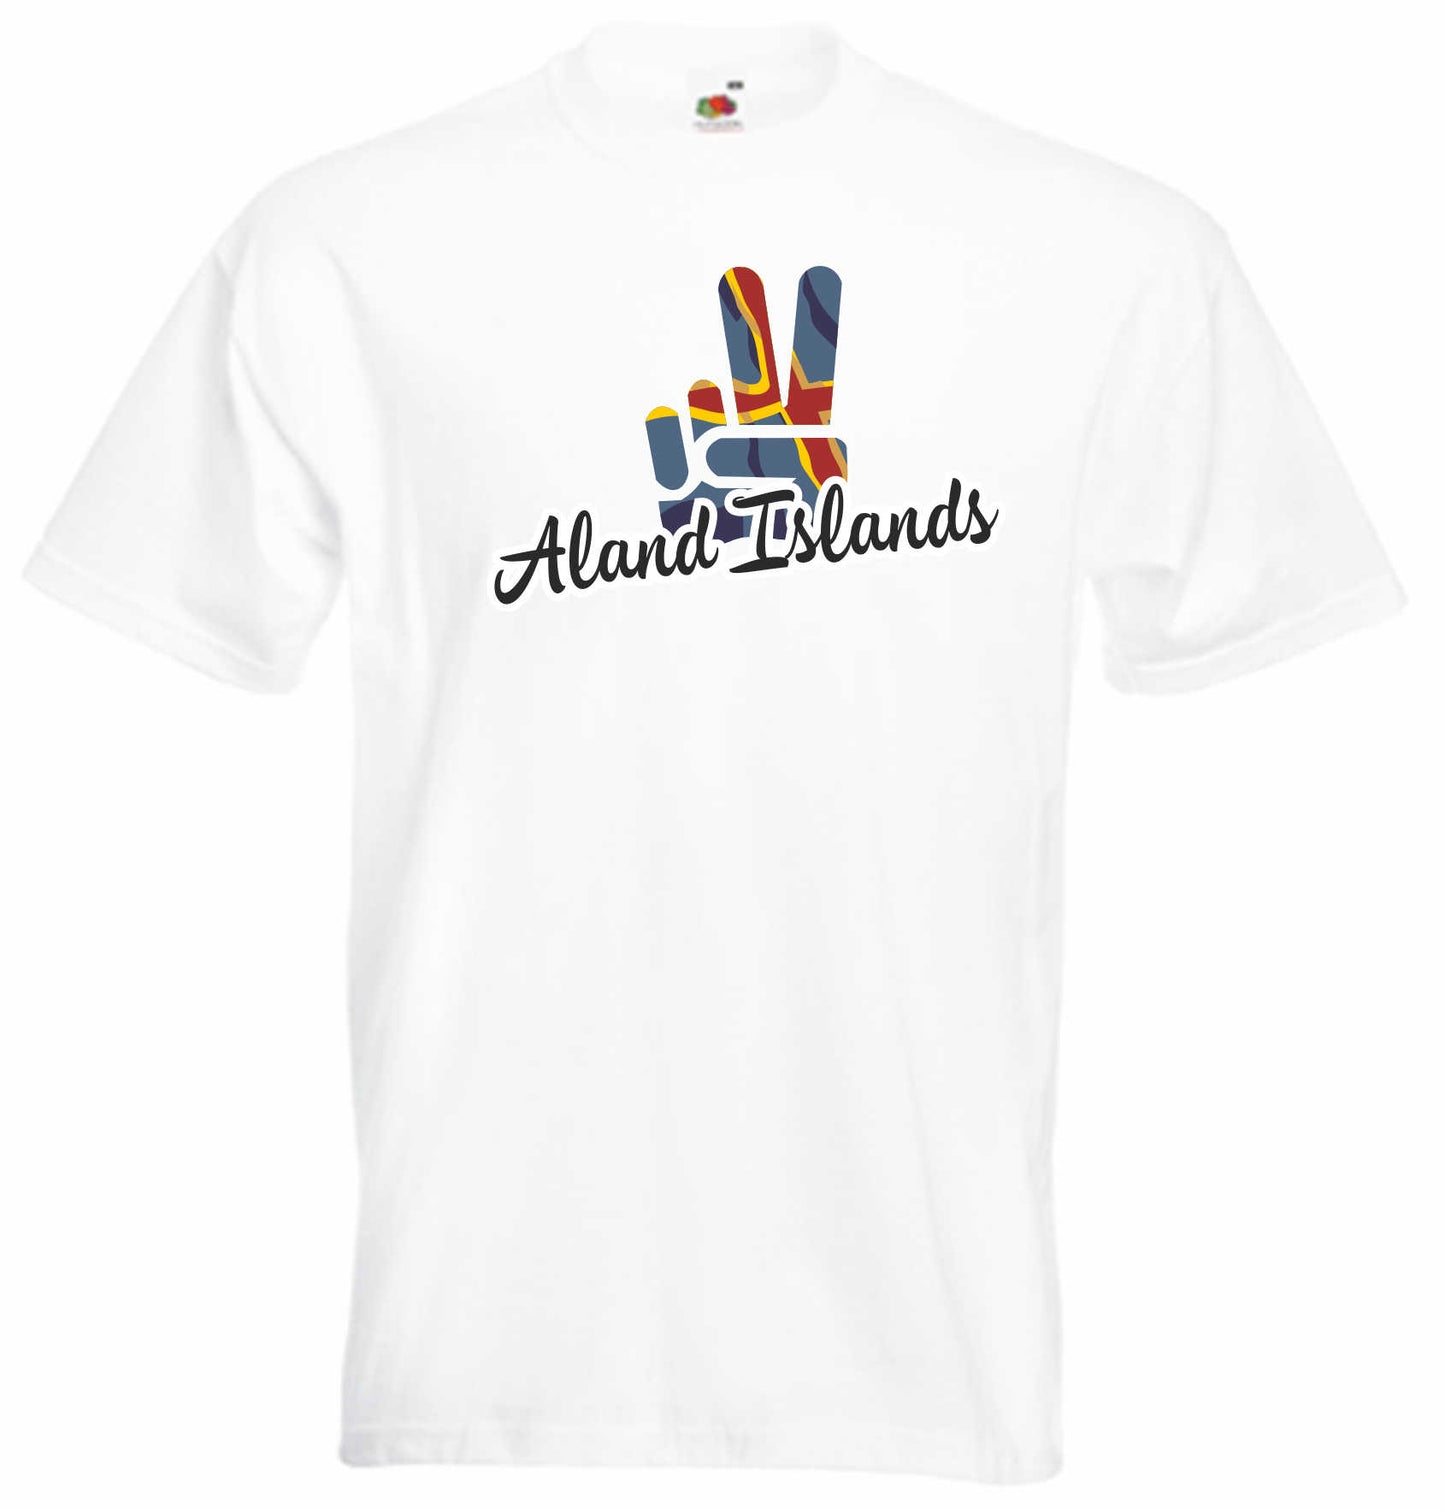 T-Shirt Herren - Victory - Flagge / Fahne - Aland Islands - Sieg